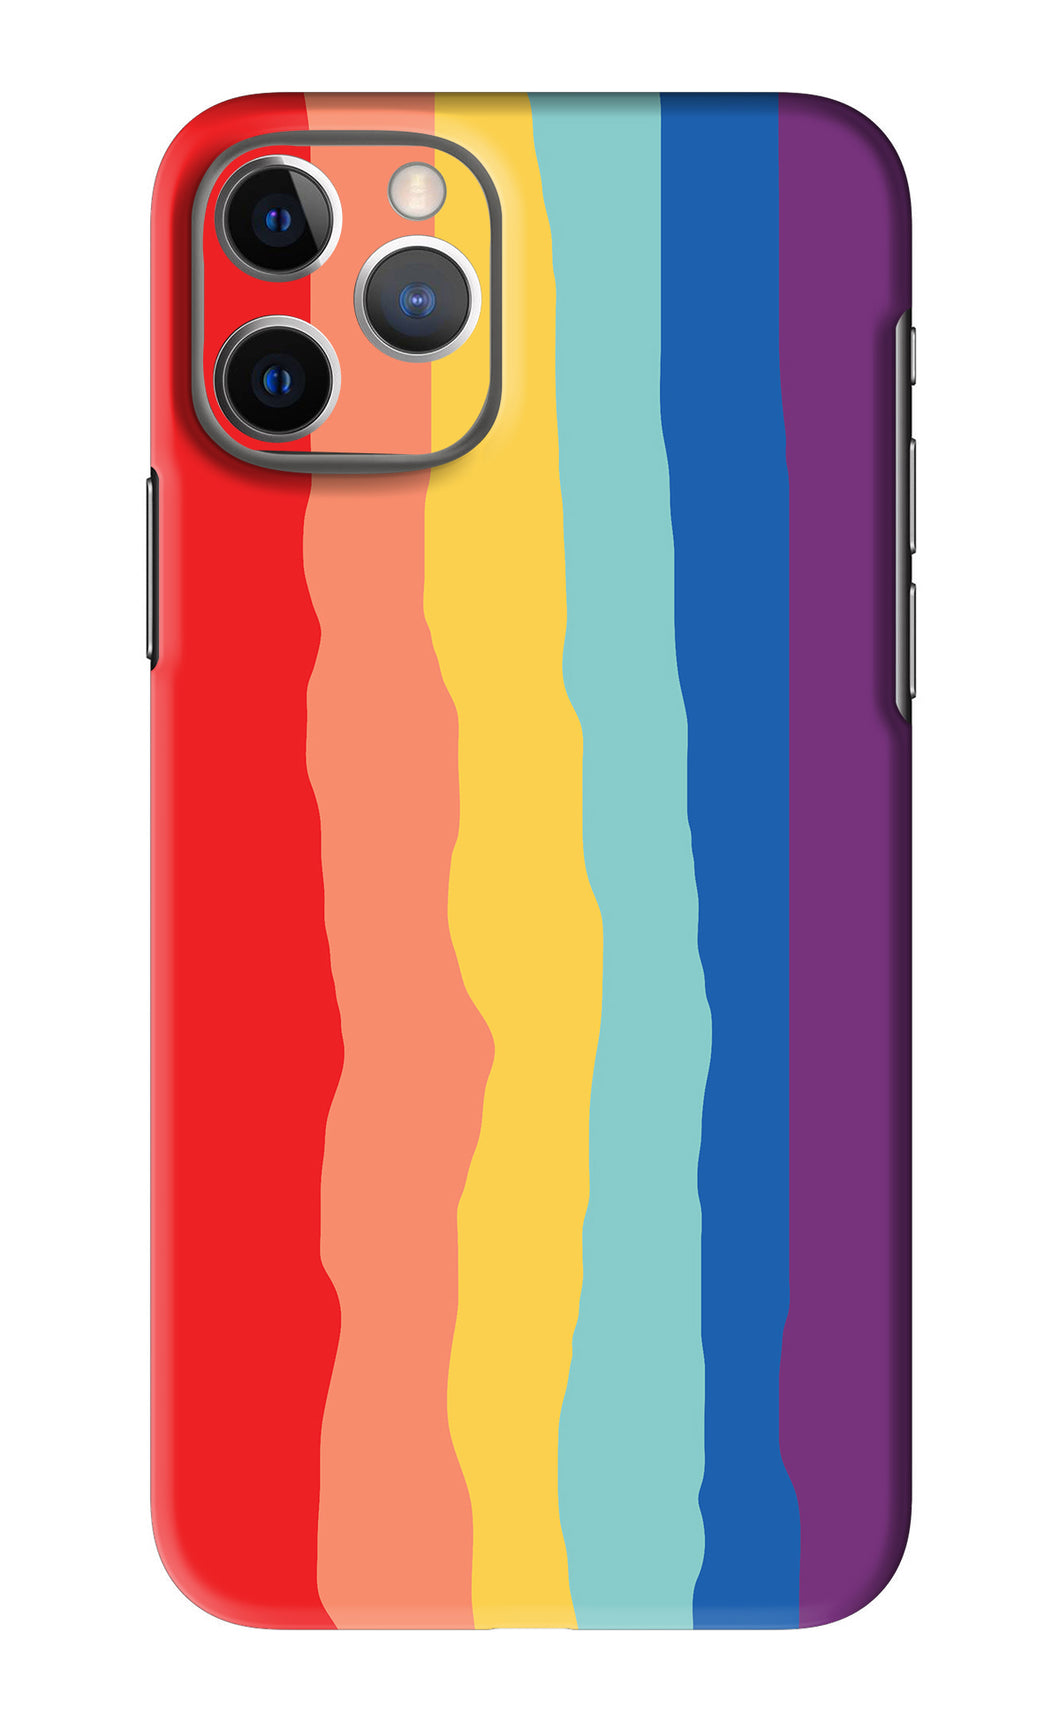 Rainbow iPhone 11 Pro Max Back Skin Wrap